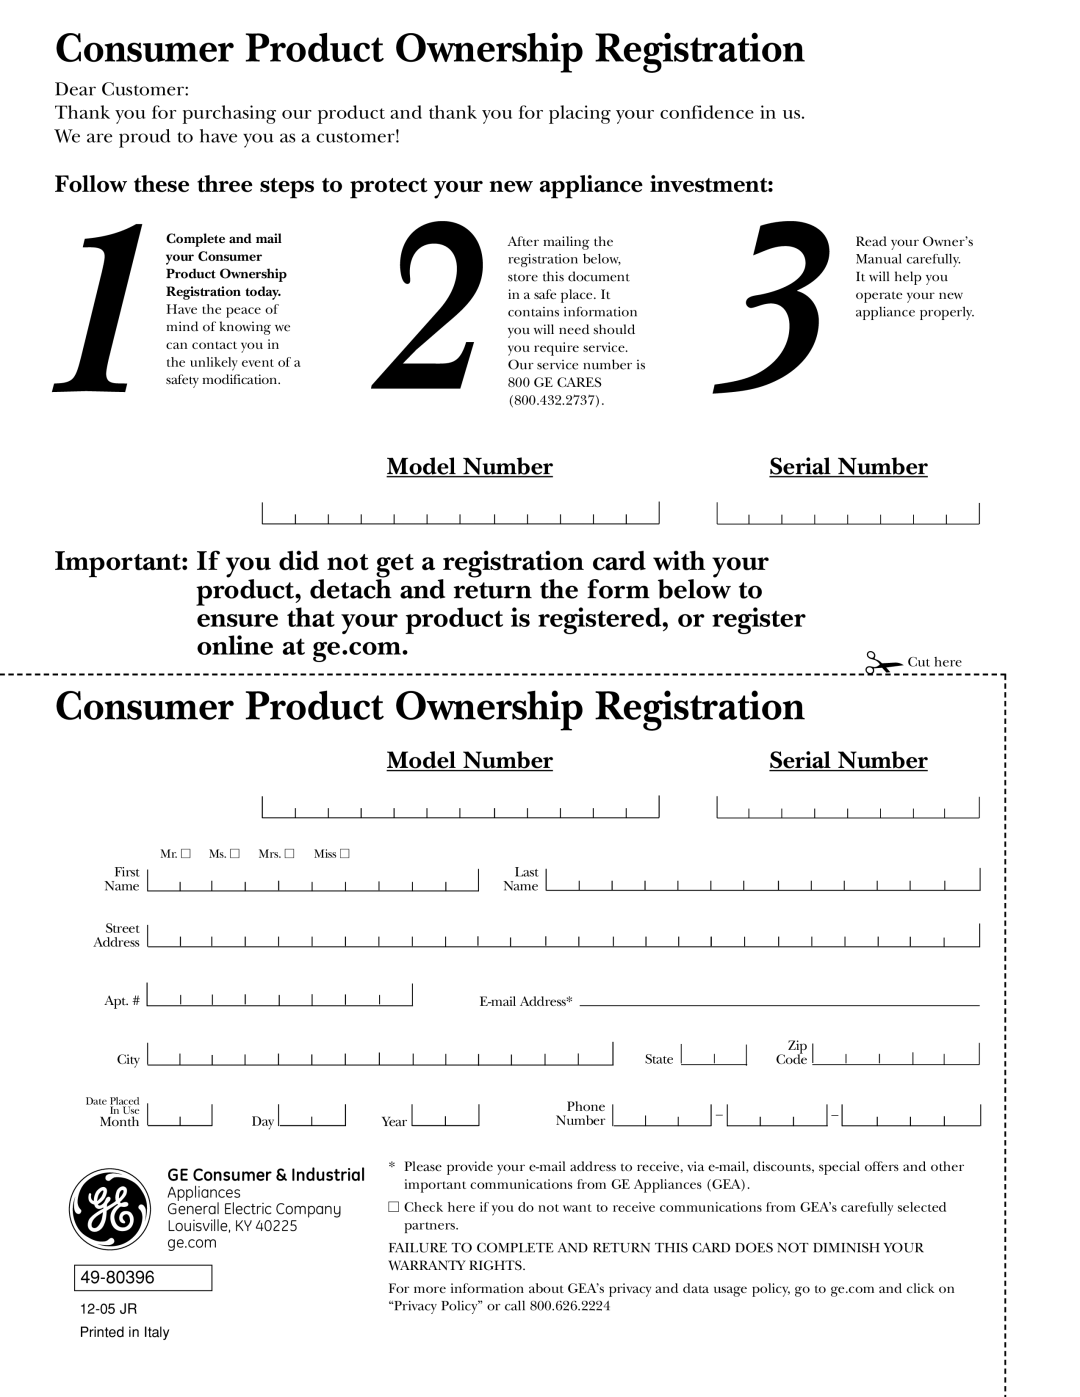 GE Monogram ZV850 Model Number, Serial Number, Consumer Product Ownership Registration, GE Consumer & Industrial, 49-80396 